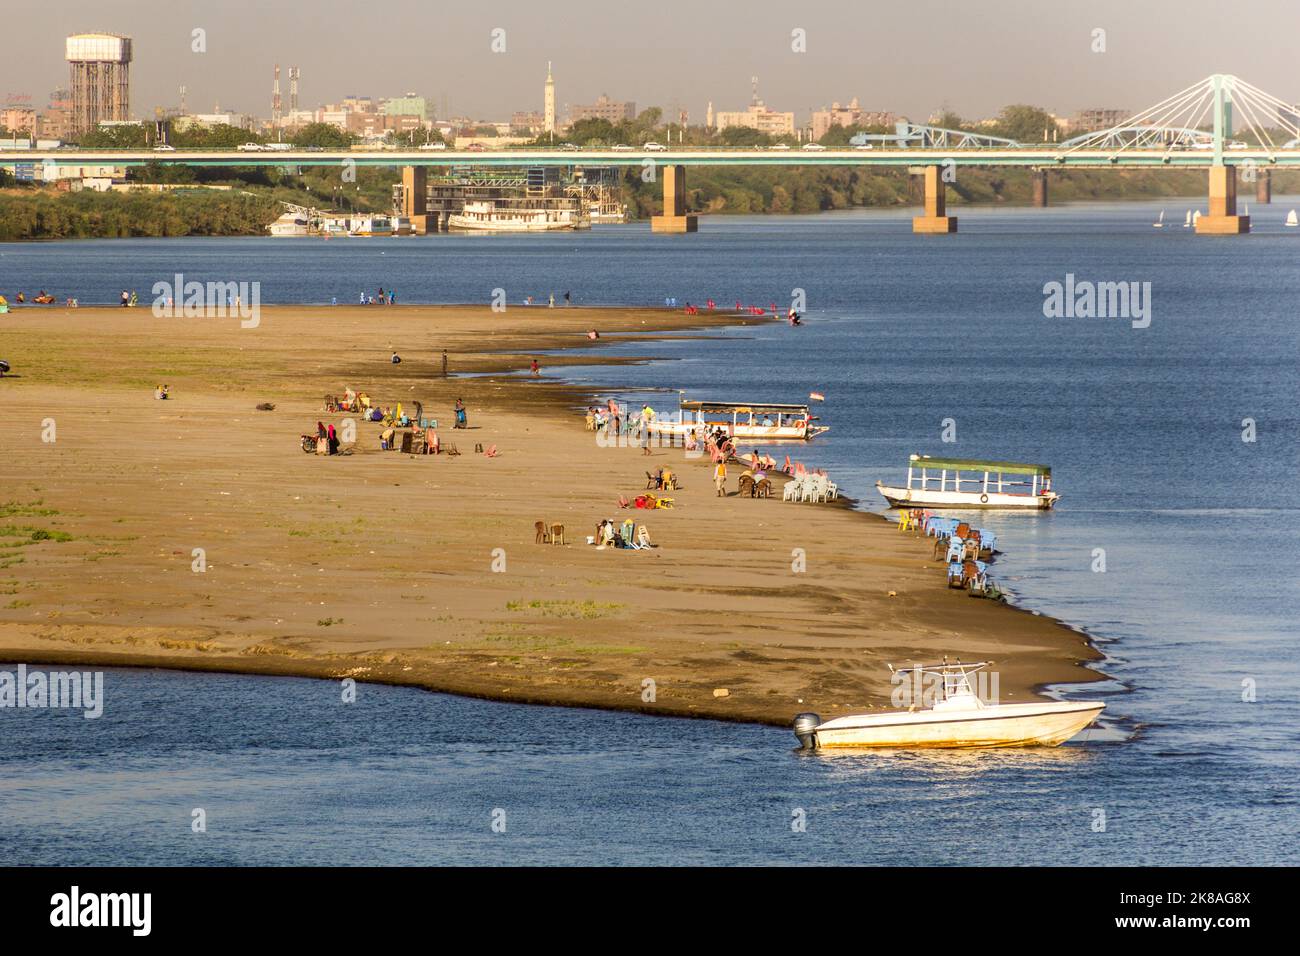 KHARTOUM, SUDAN - MARCH 7, 2019: People enjoy Tuti beach in Khartoum, capital of Sudan Stock Photo